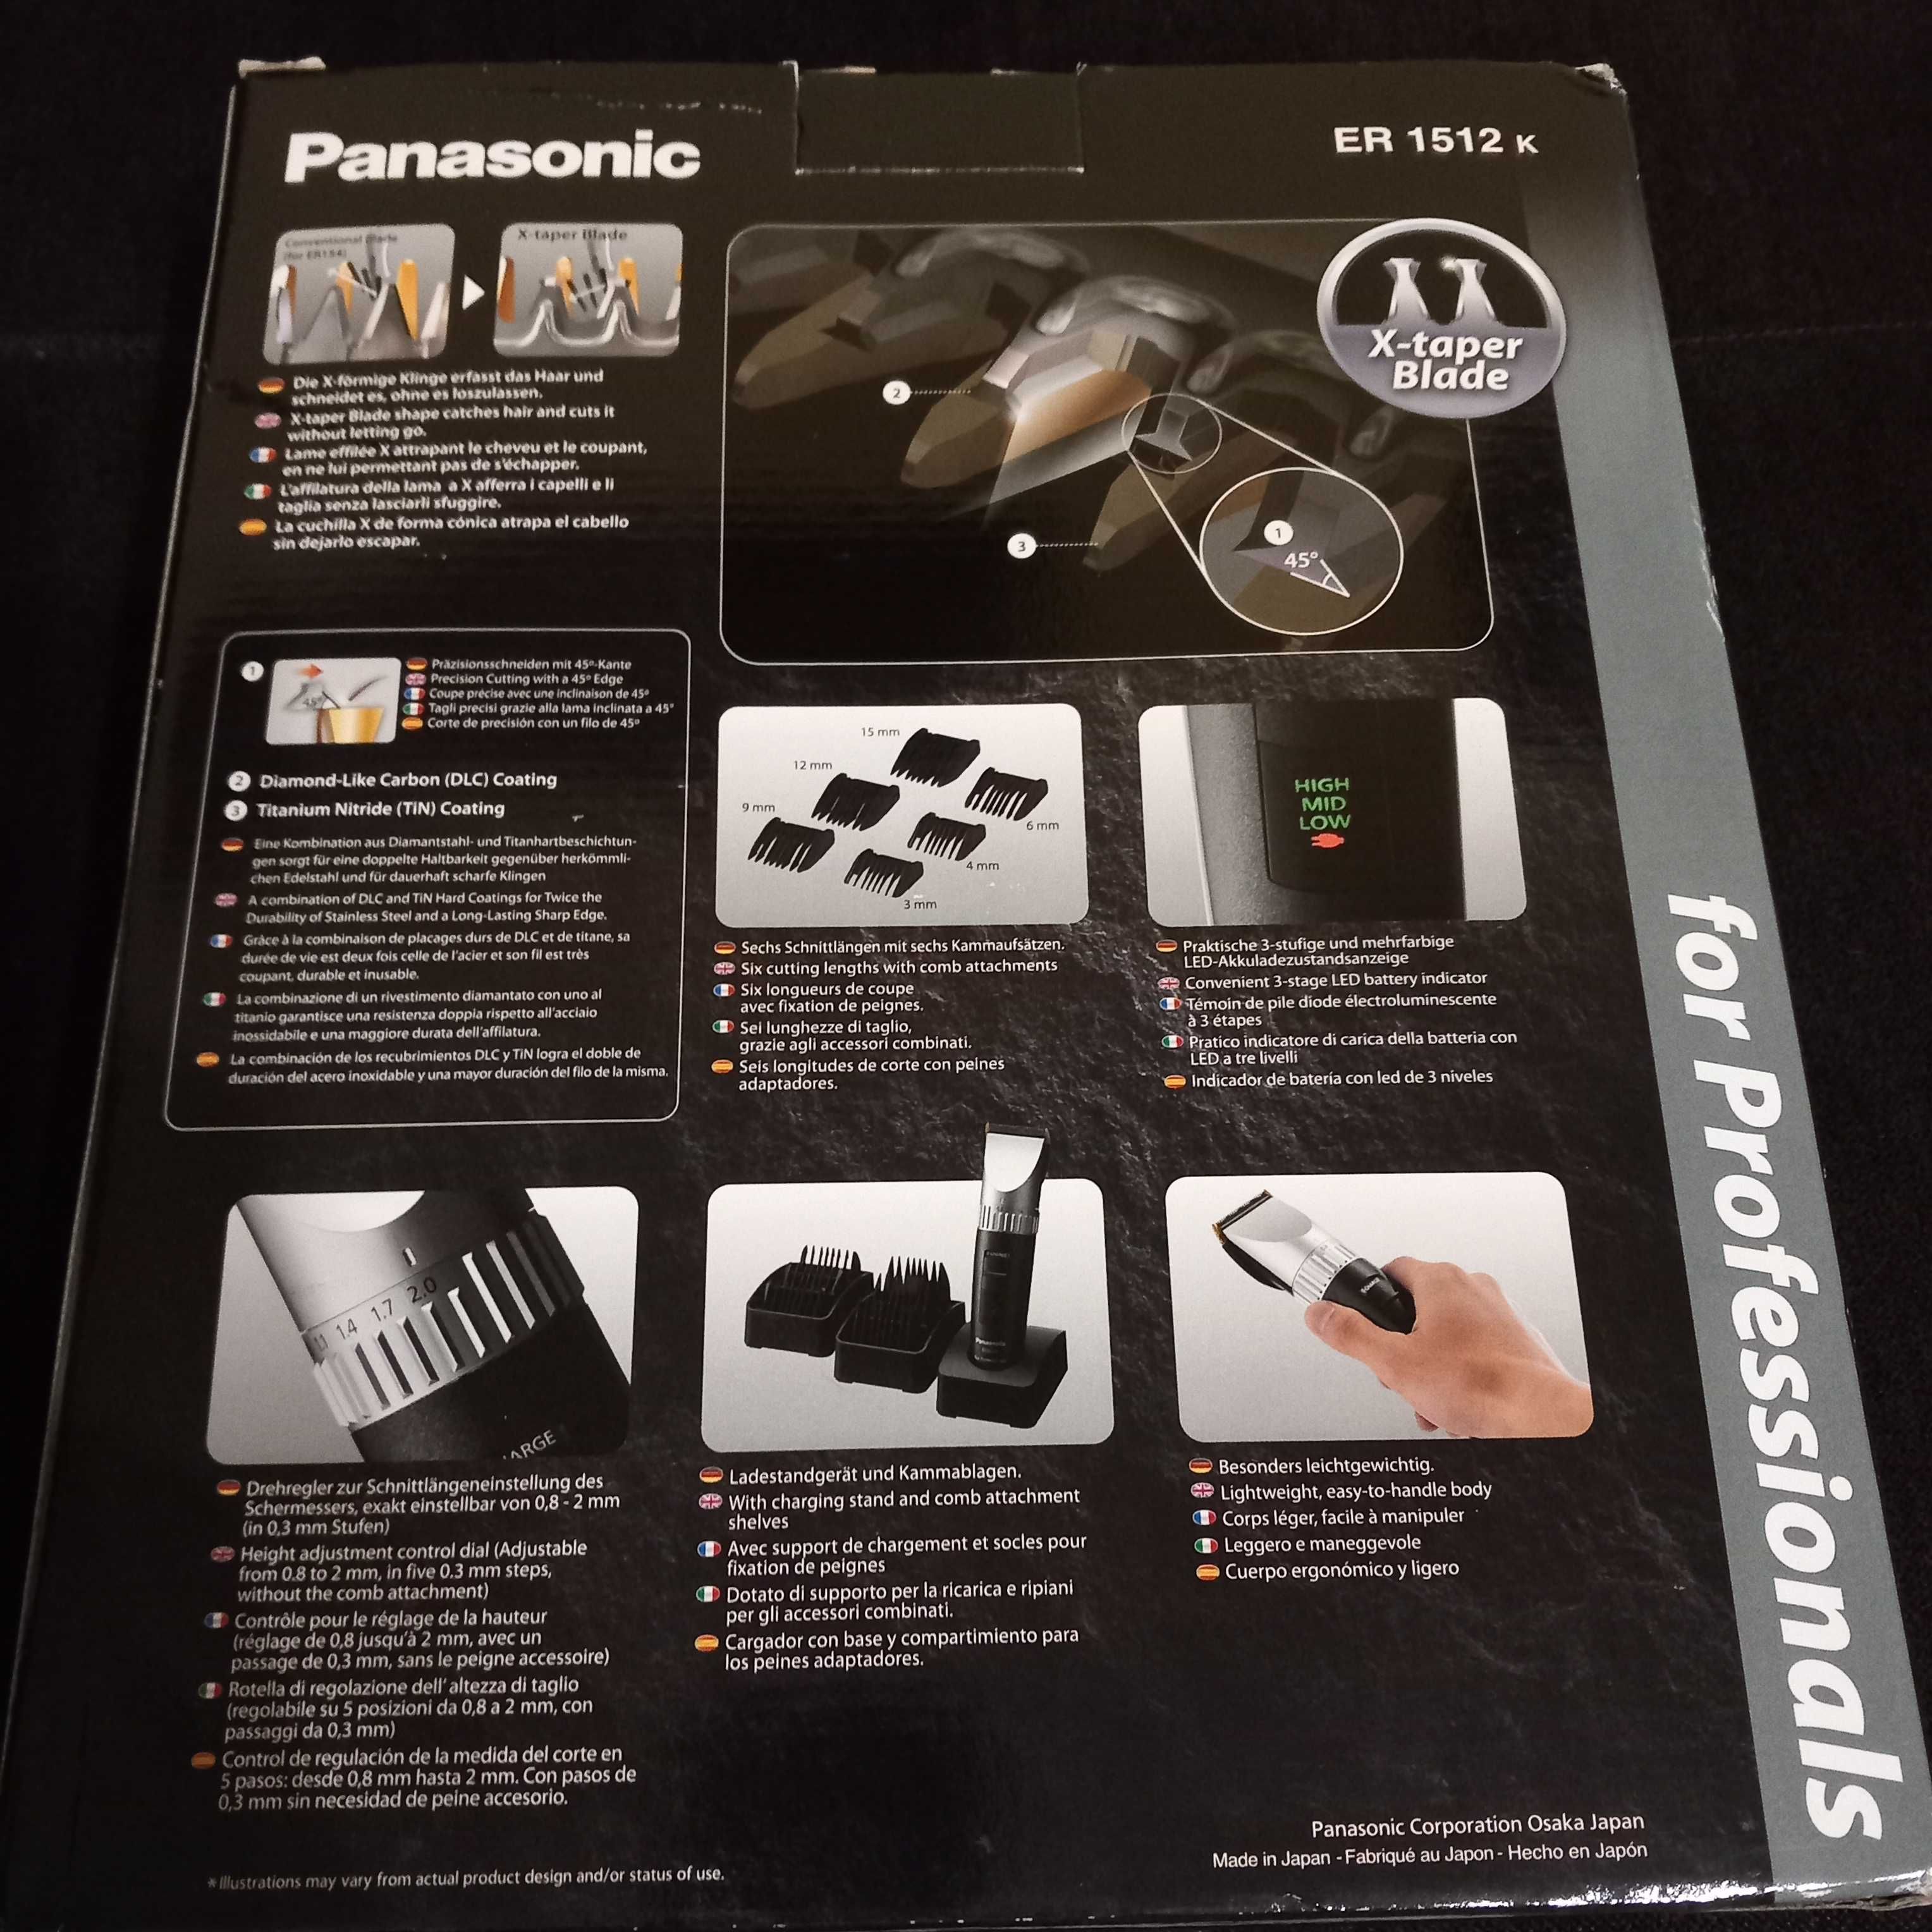 Panasonic ER 1512 k